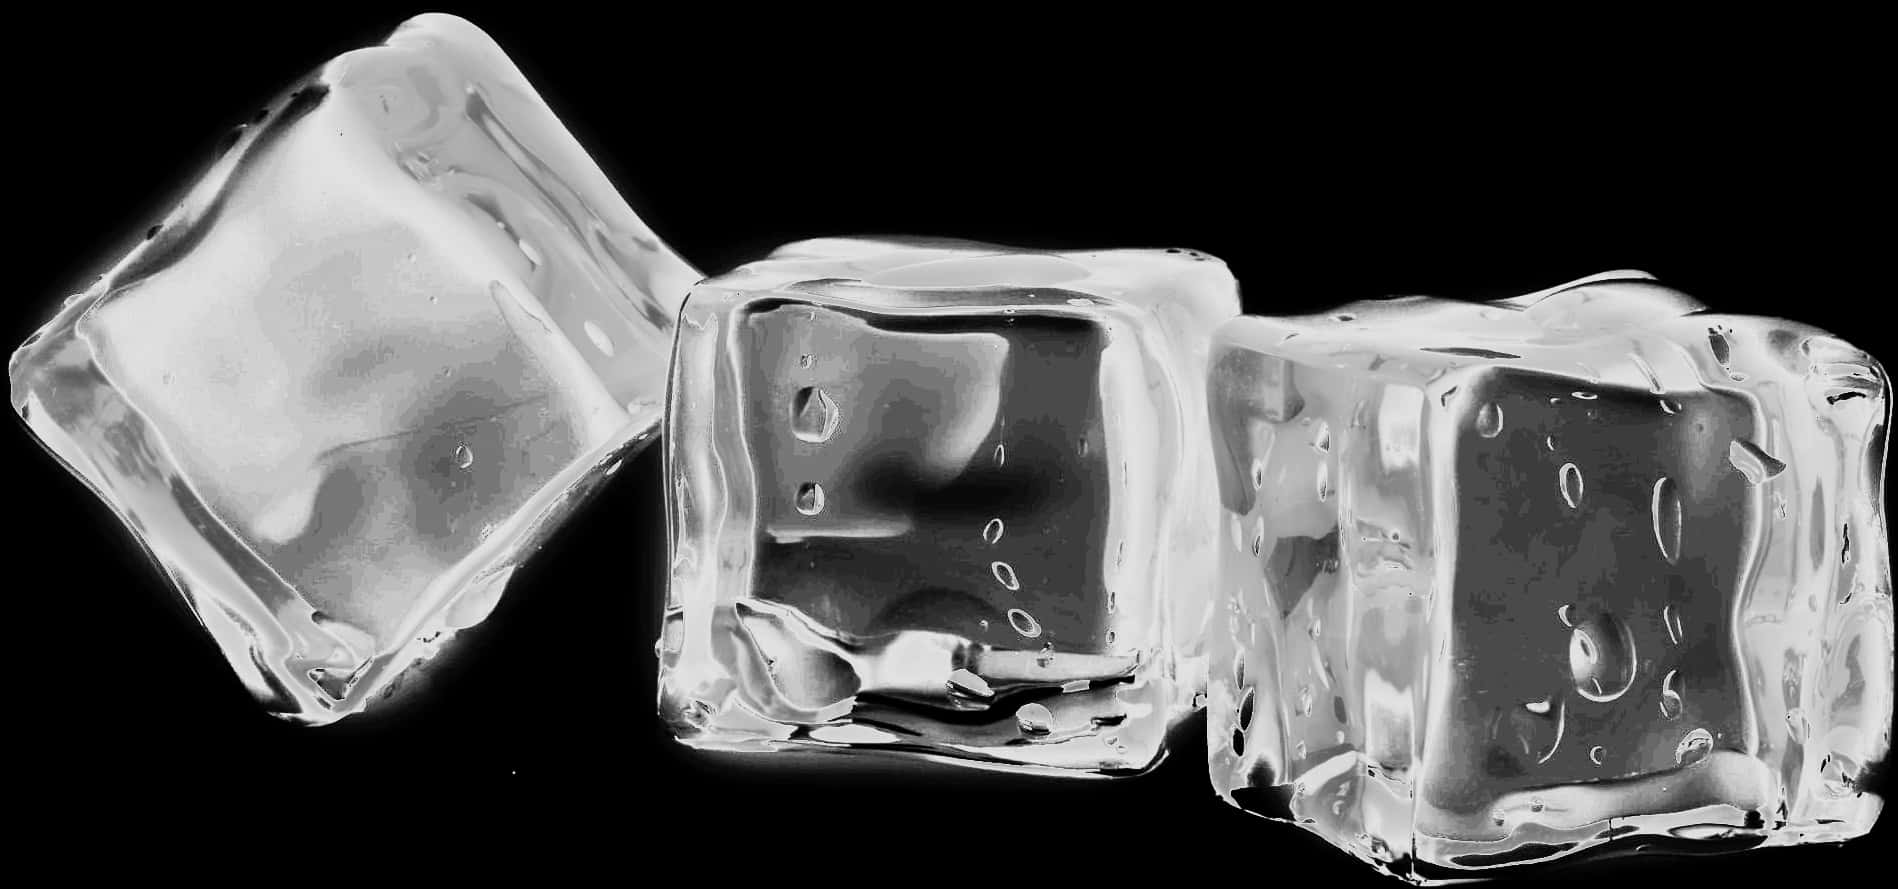 Three Transparent Ice Cubes